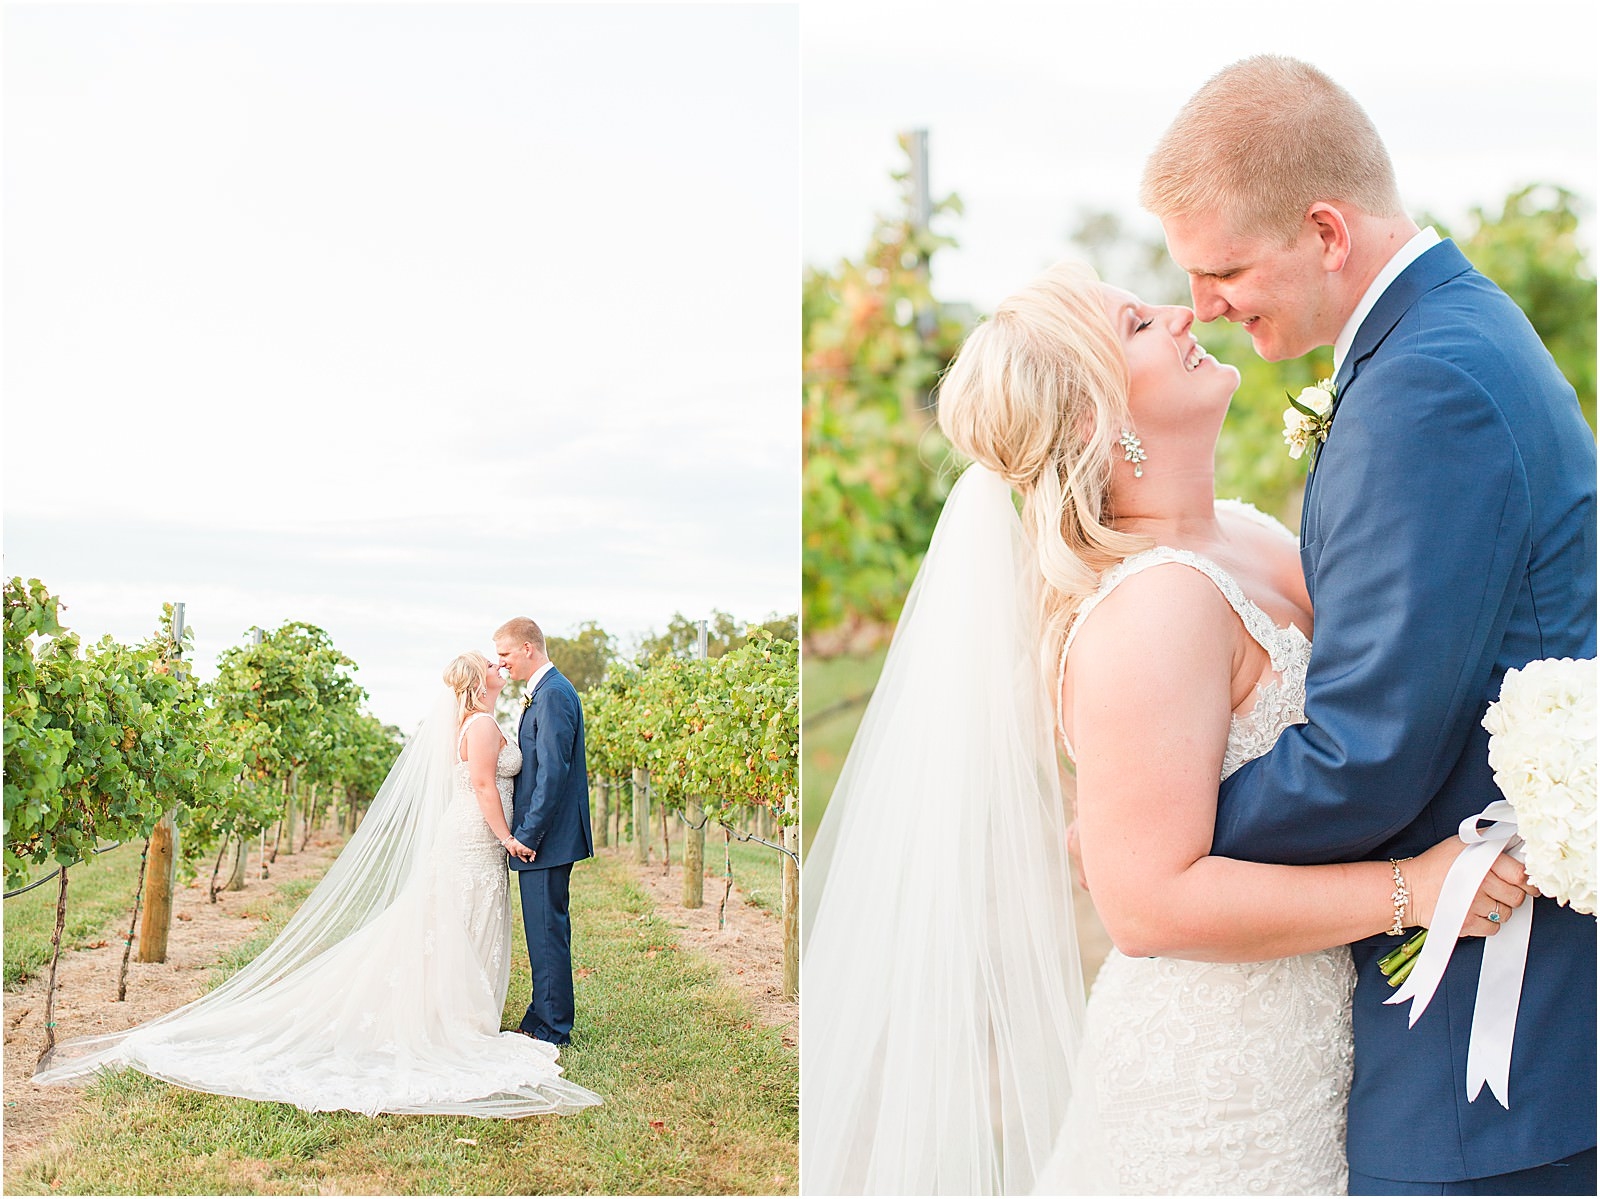 Kelsey and Caleb | Walkers Bluff Winery Wedding | Bret and Brandie Photography104.jpg